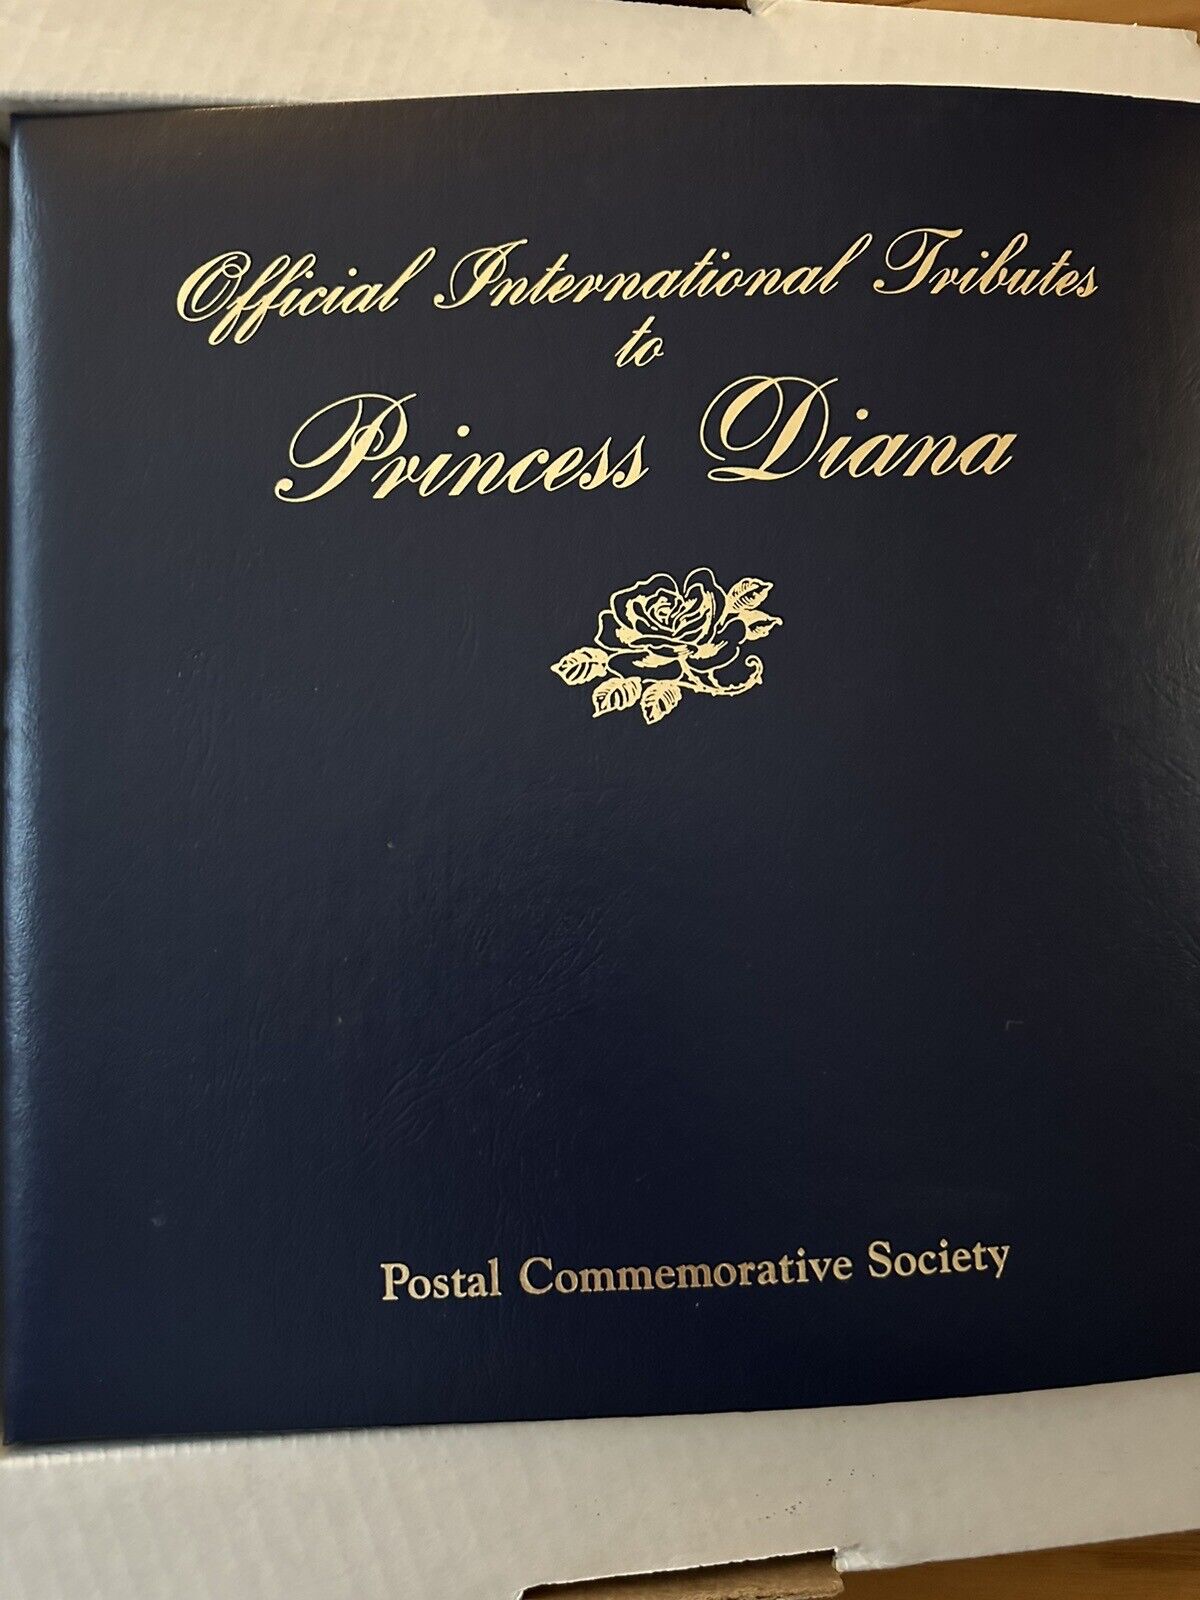 Official International Tributes to Princess Diana • Postal Commemorative Society